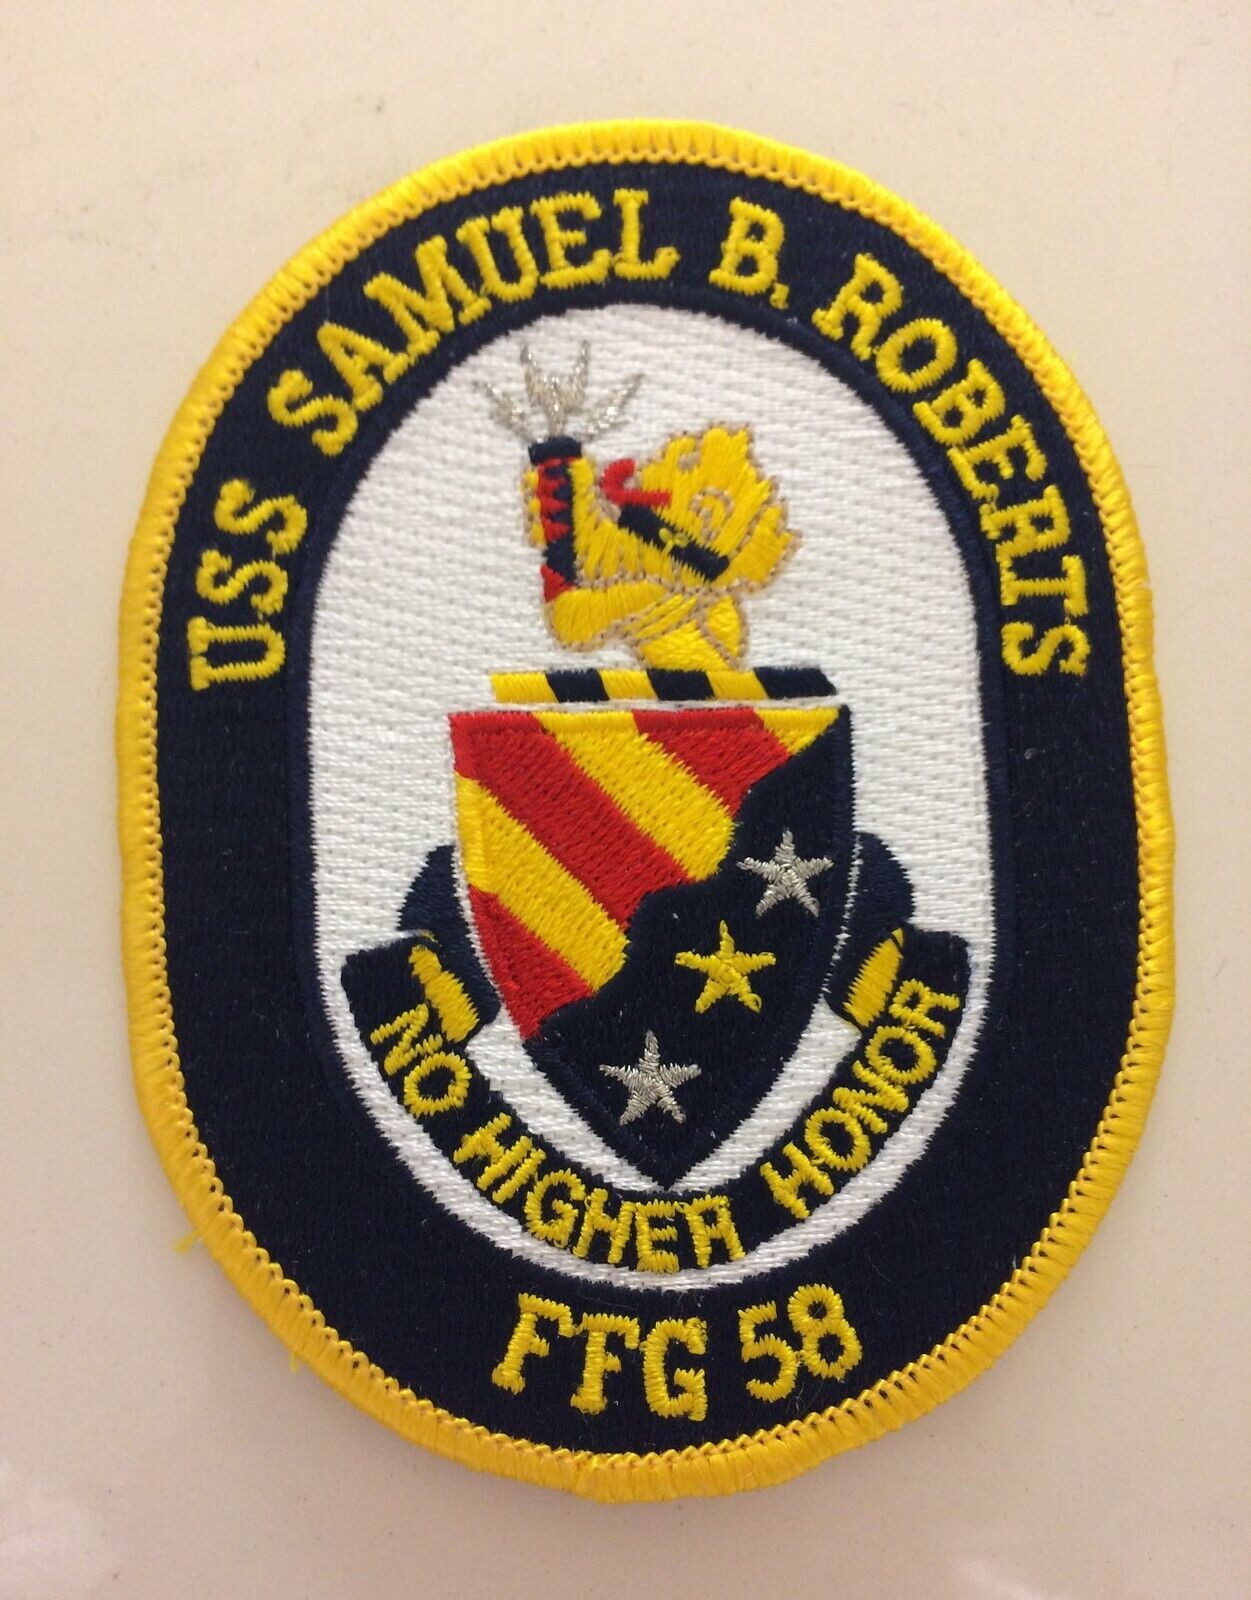 Patch of USS SAMUEL B. ROBERTS (FFG 58)